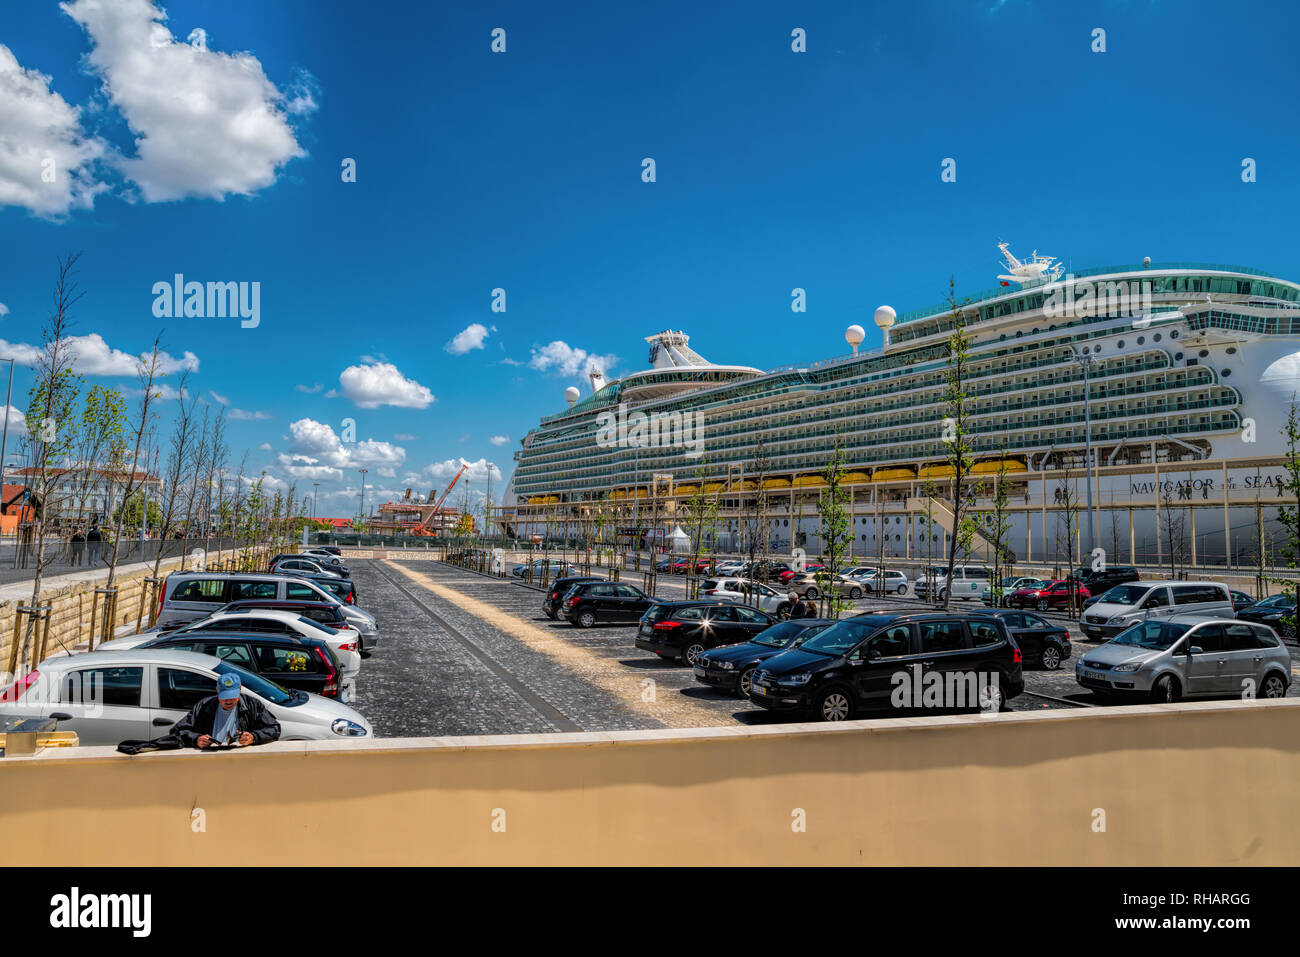 Large luxury cruise ship Navigator of the Seas docked at Lisbon Stock Photo